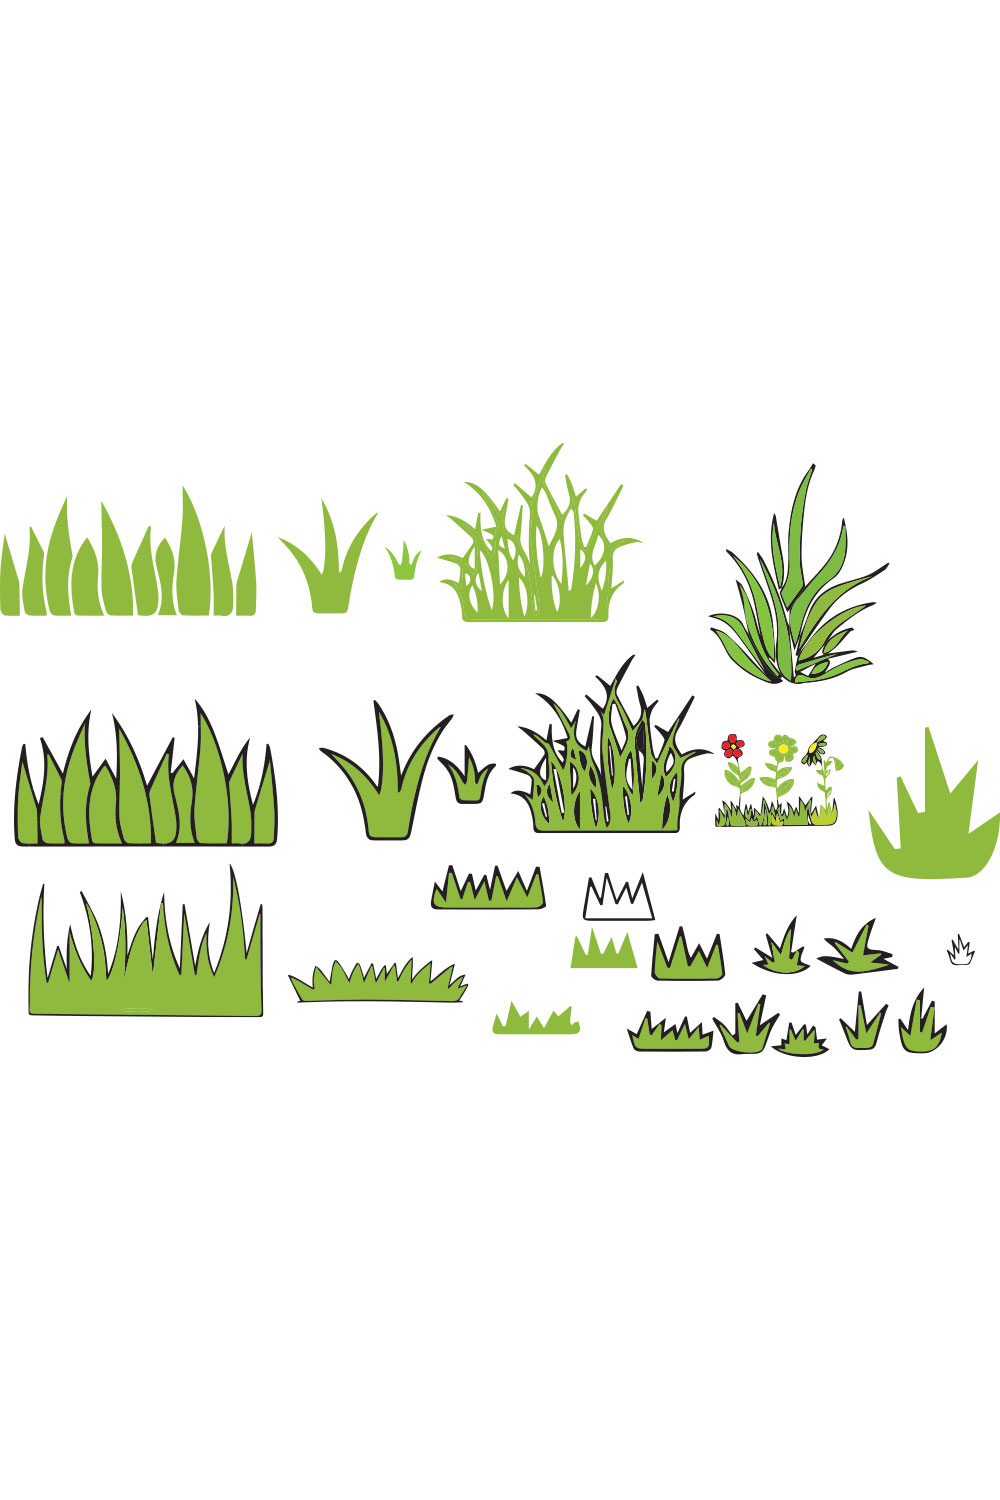 grass vector illustration pinterest preview image.